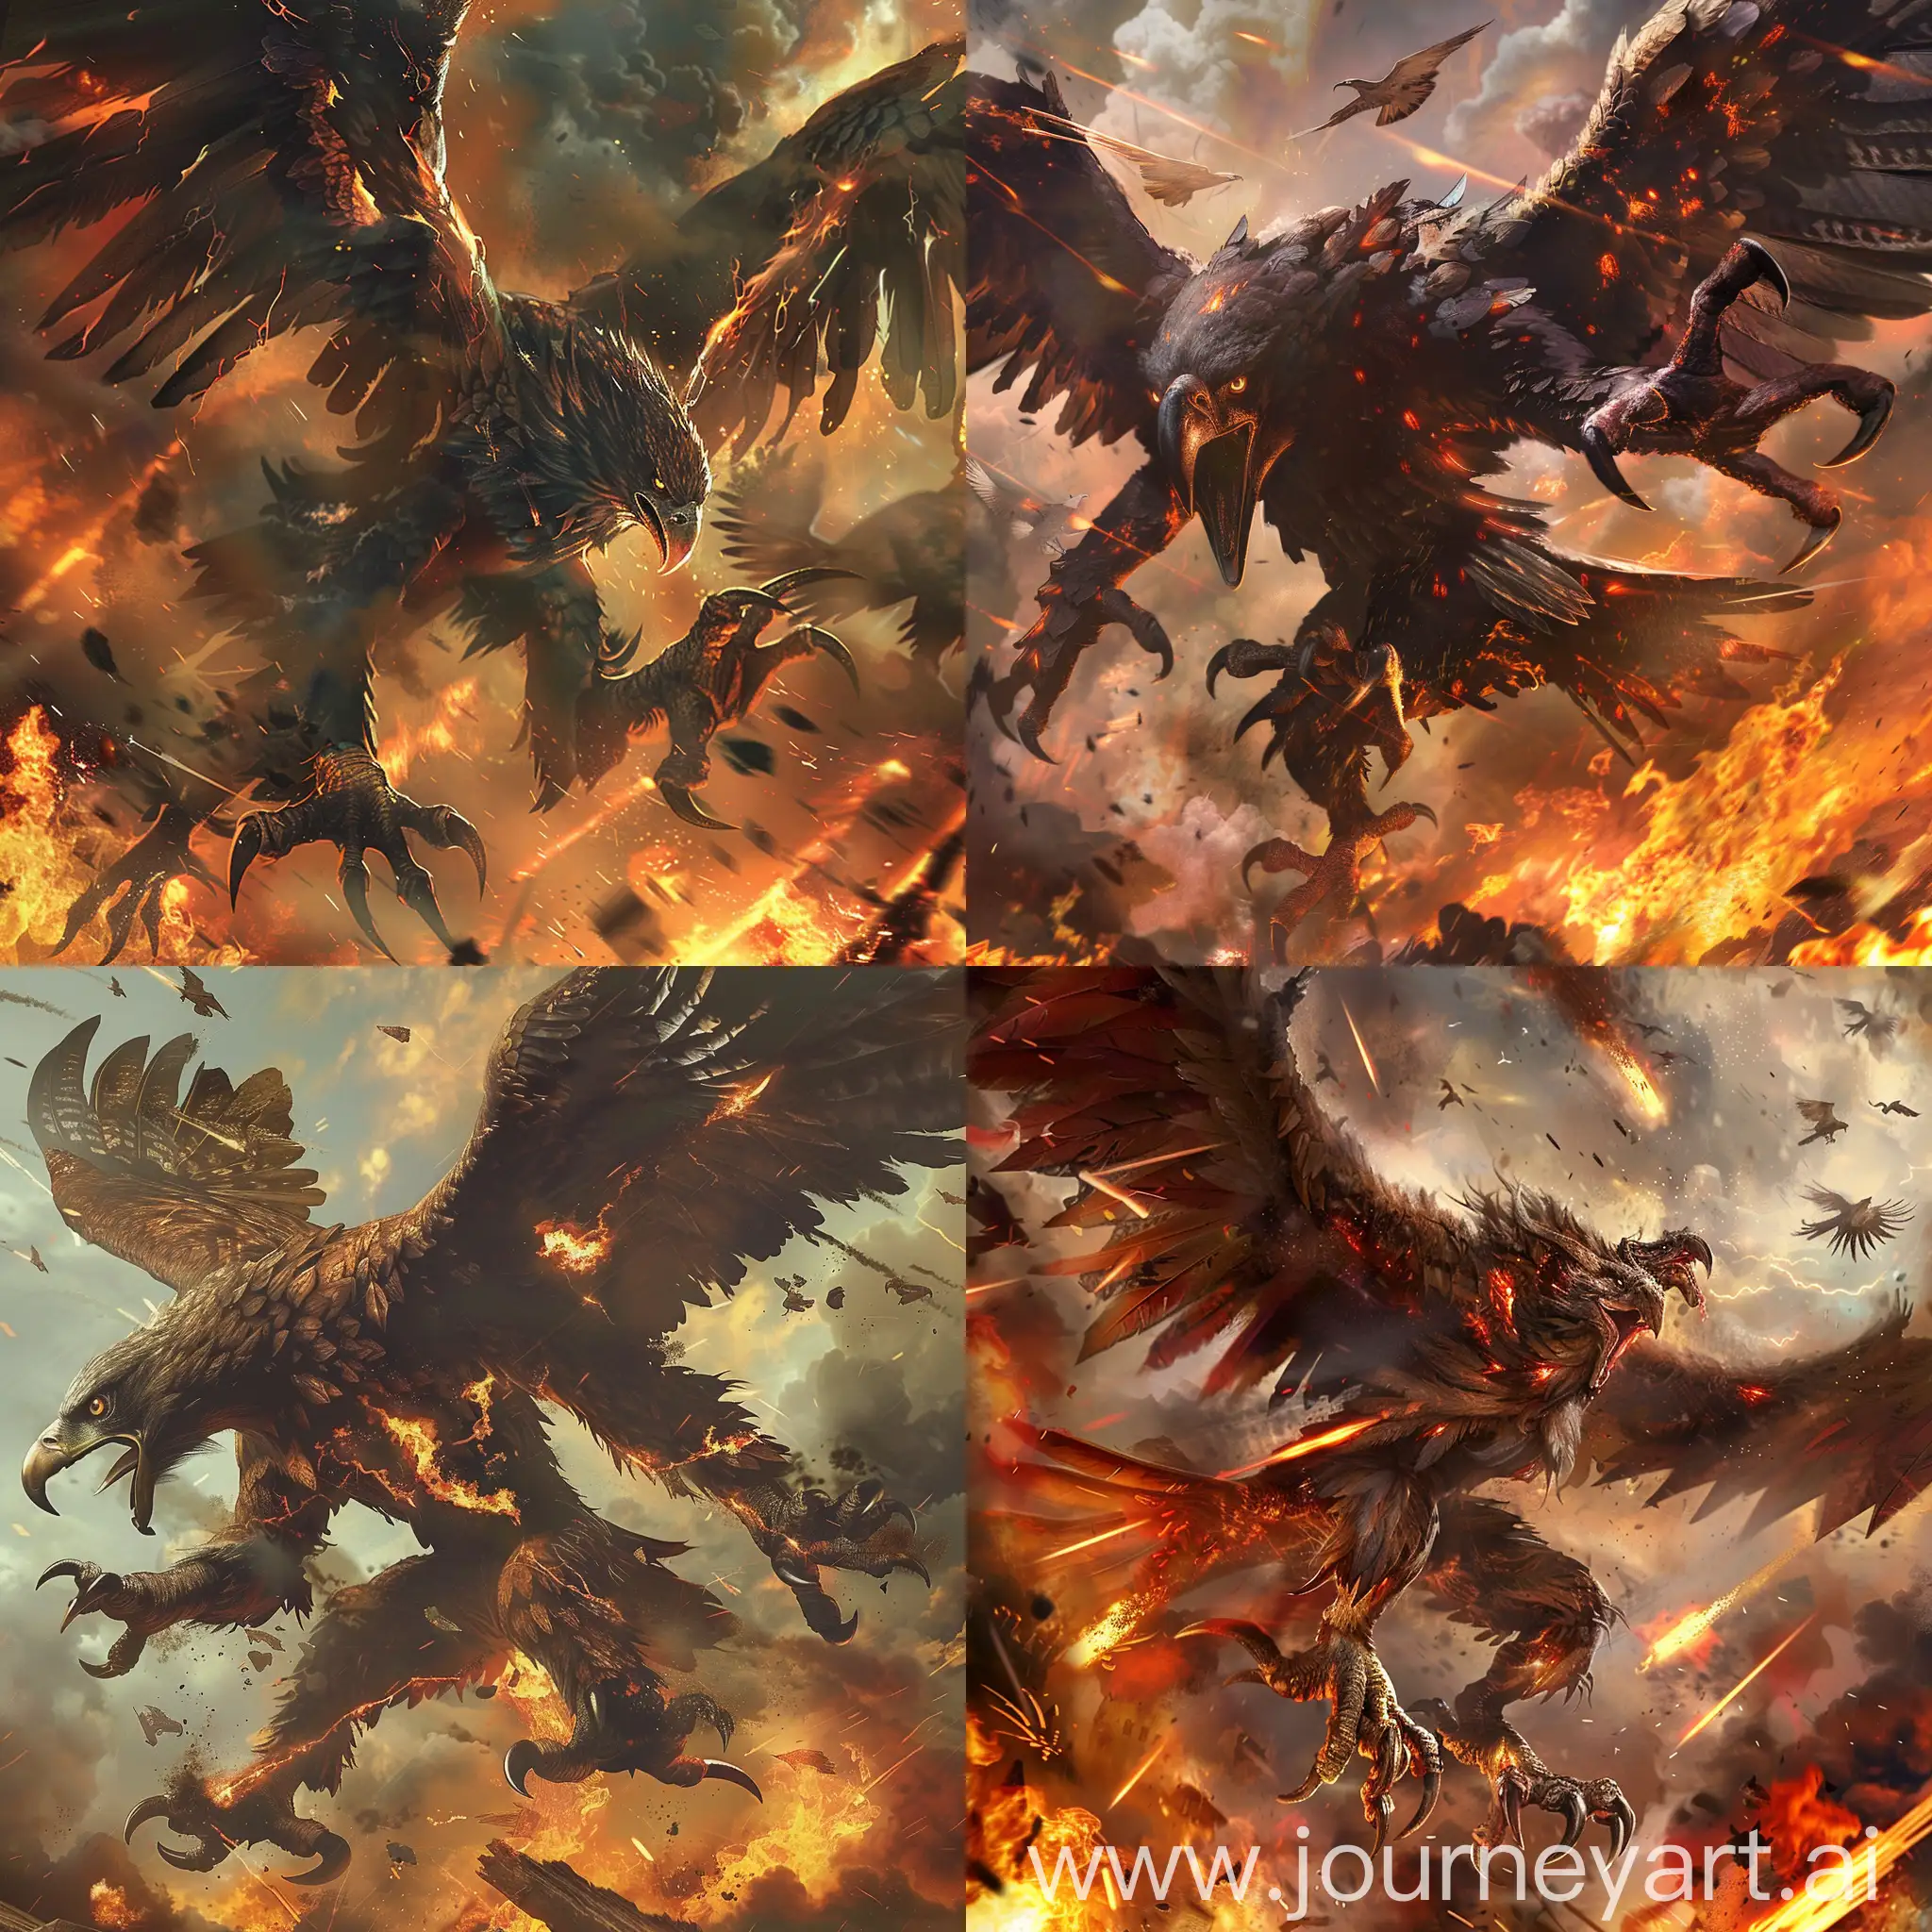 Ferocious-EagleWinged-Daemon-Engaged-in-Fiery-Battle